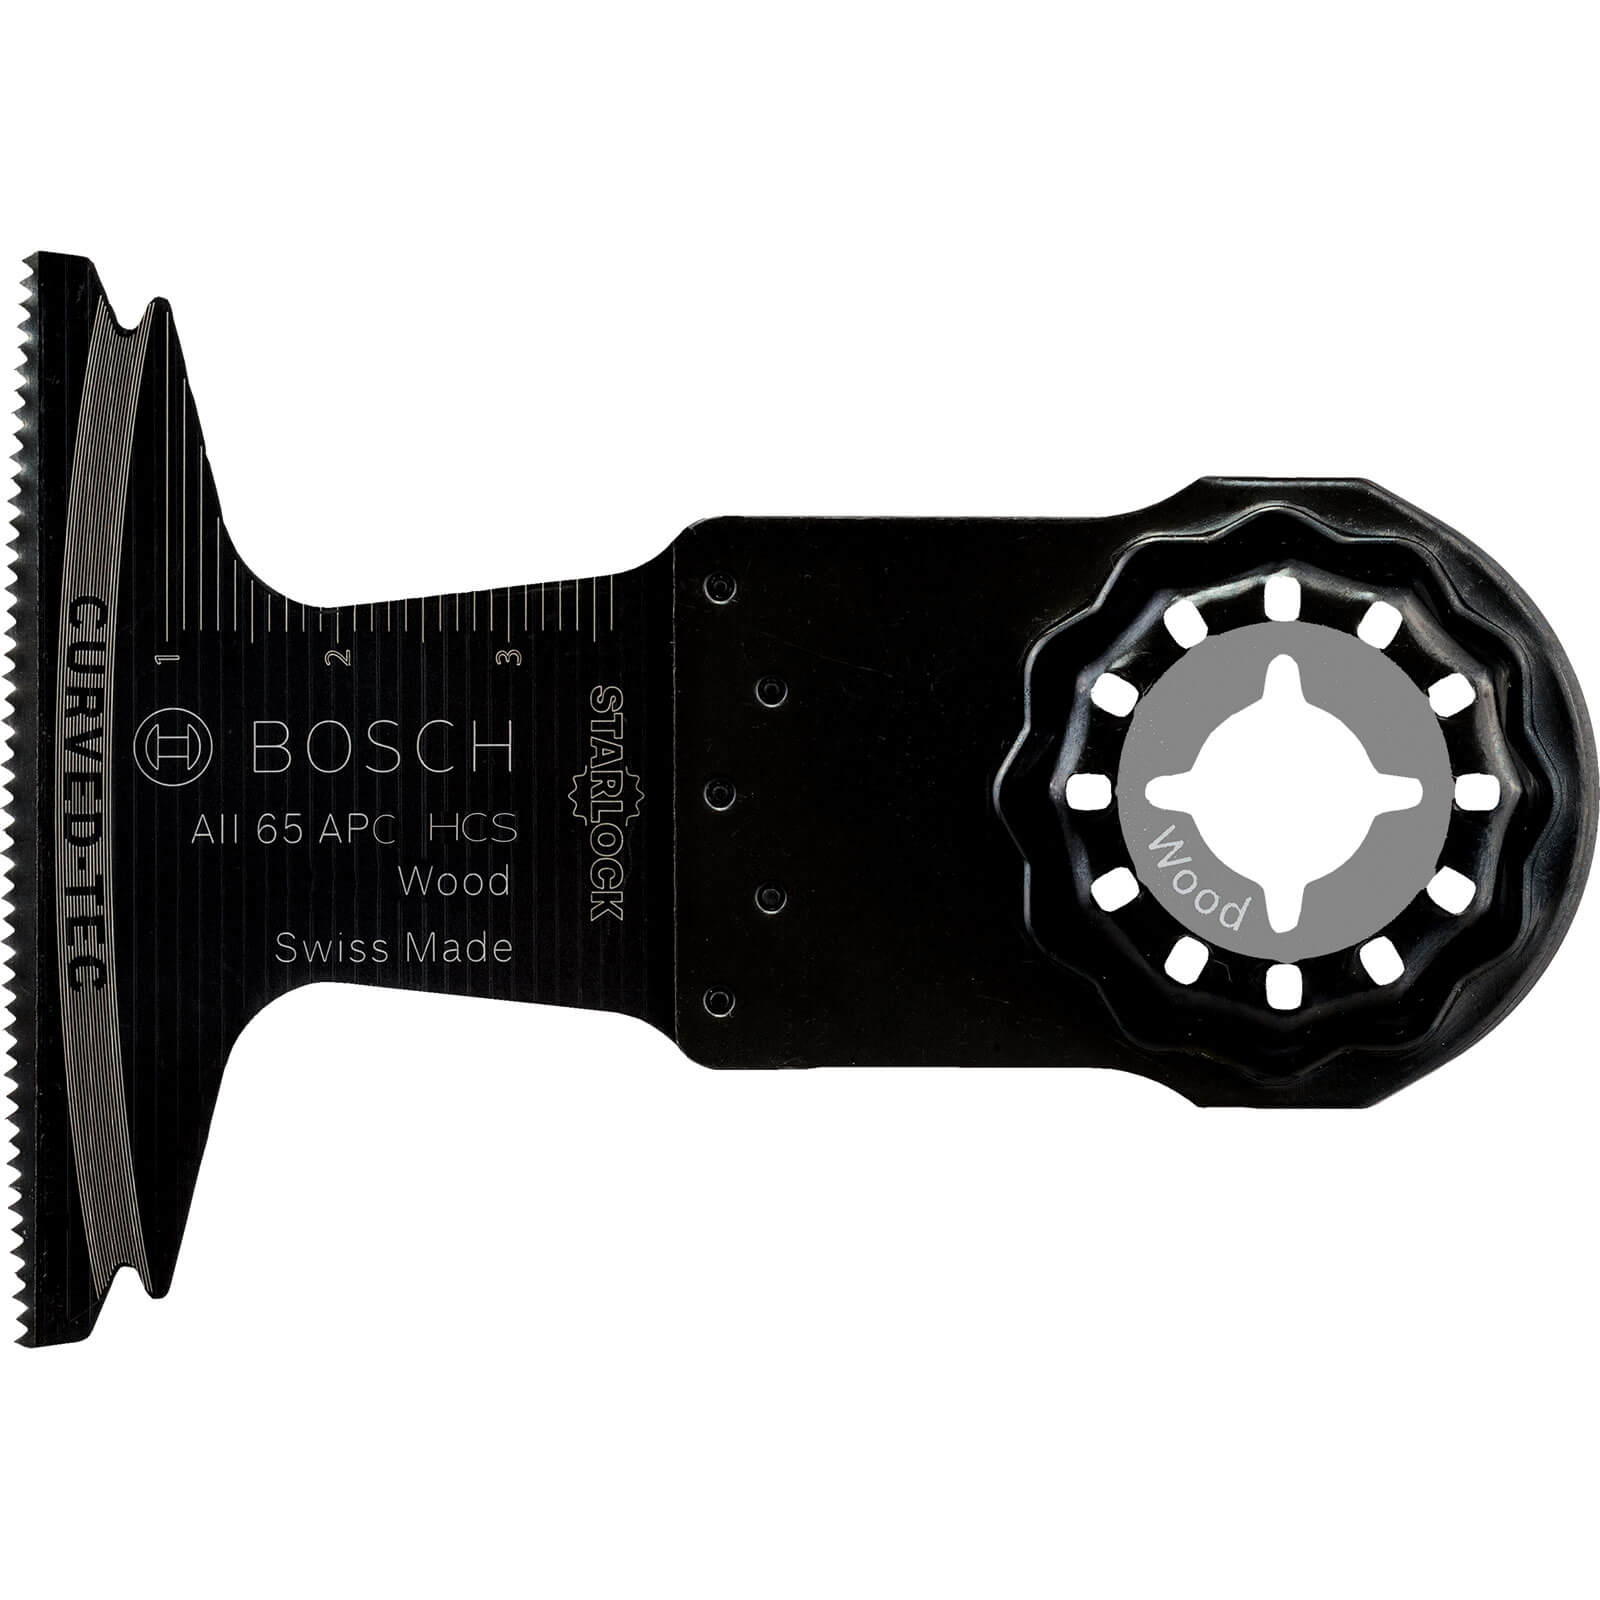 Bosch All 65 APC Wood HCS Starlock Oscillating Multi Tool Plunge Saw Blade 65mm Pack of 5